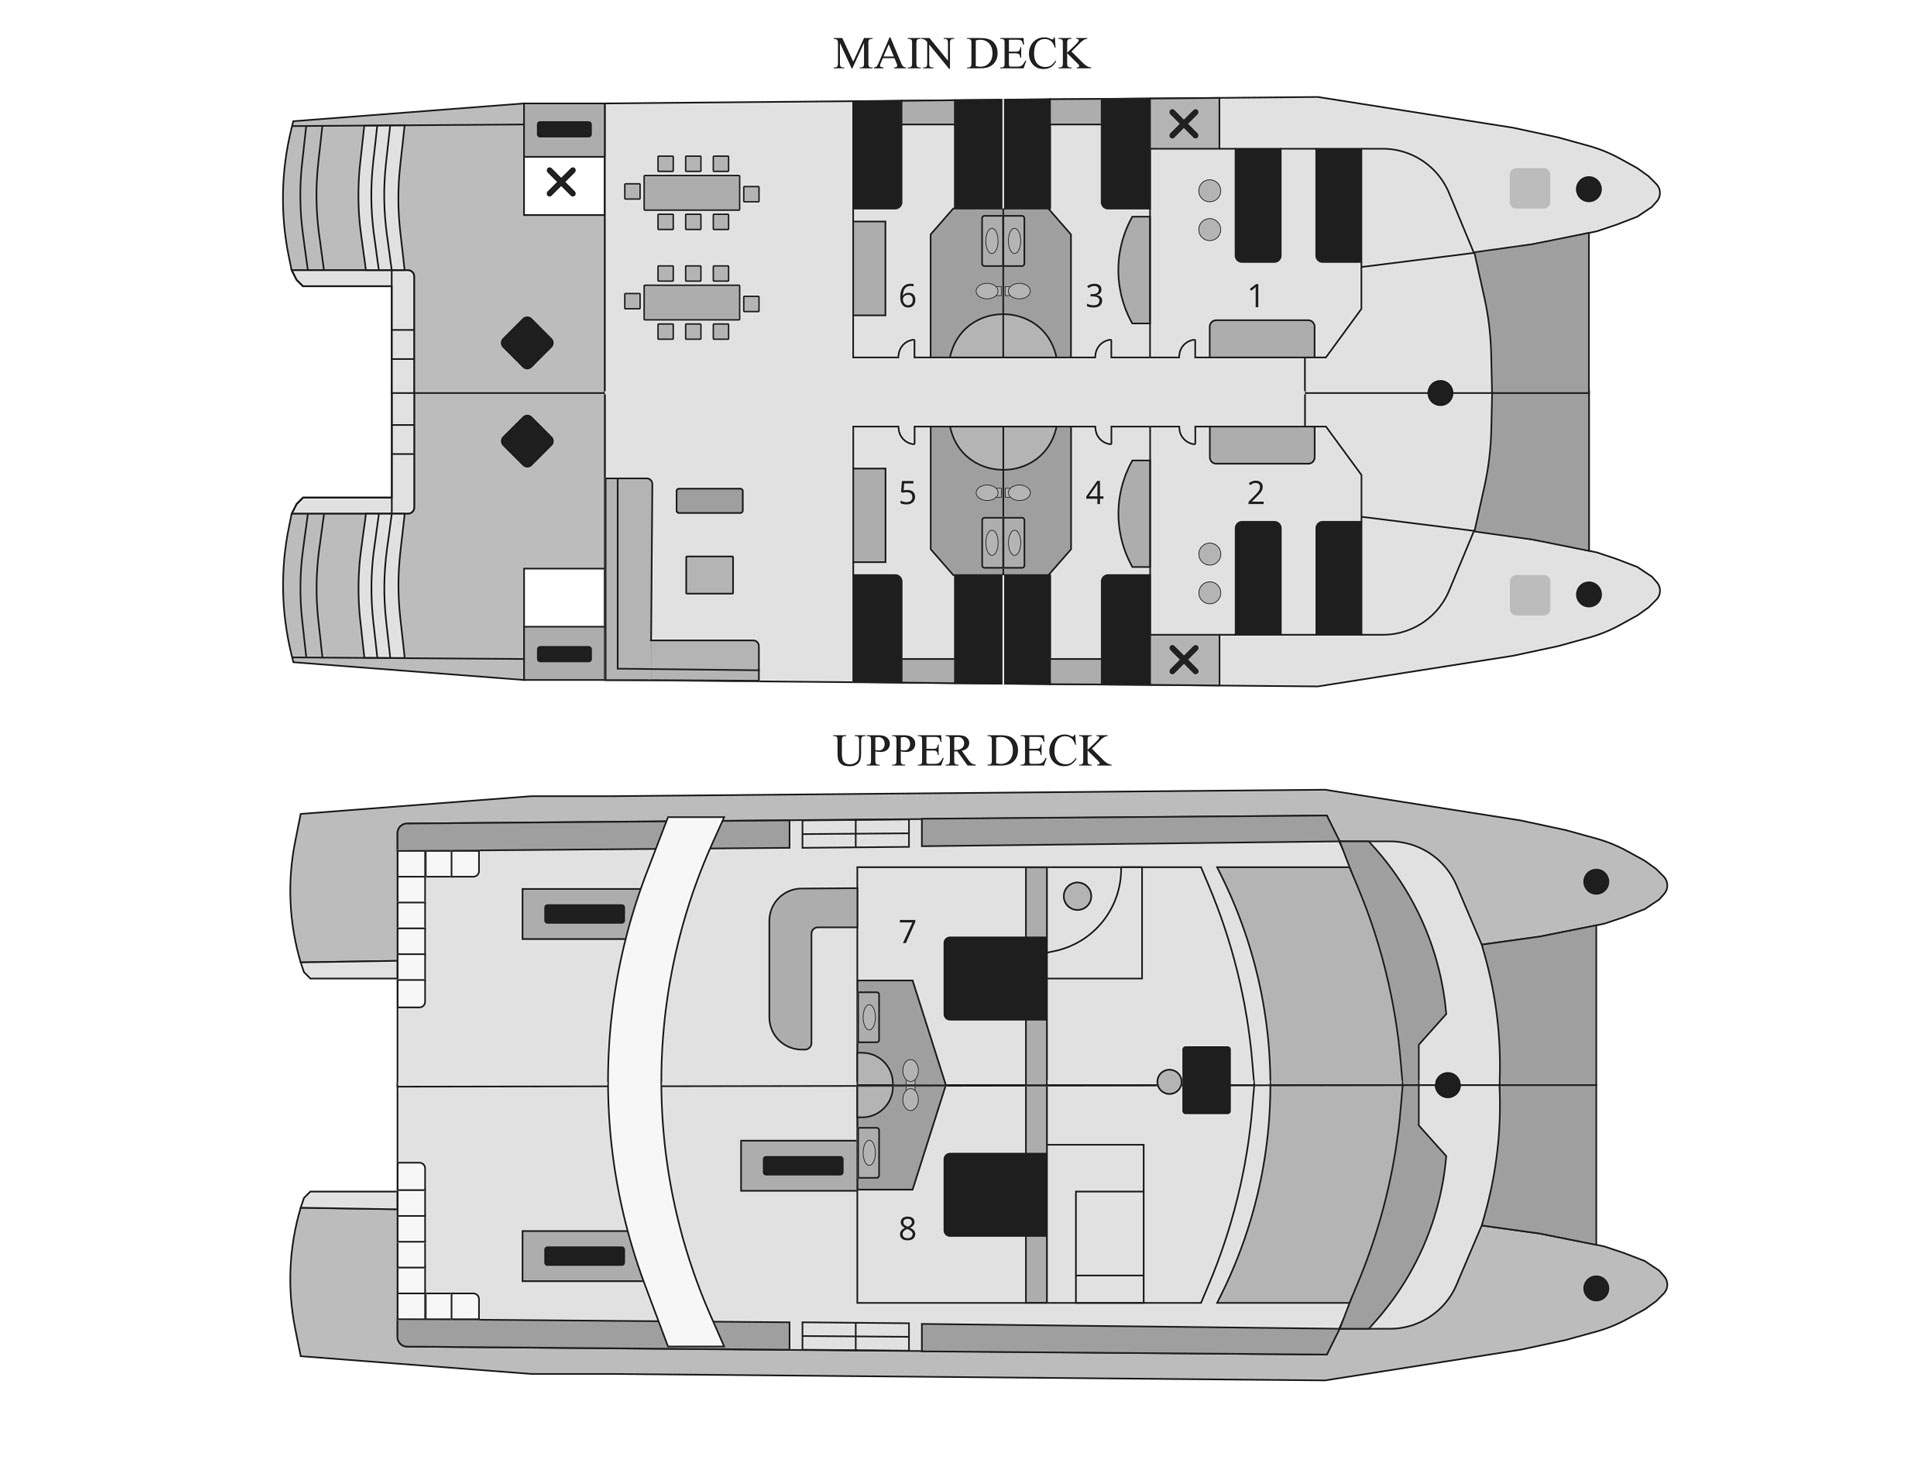 Deck plan detailing Main Deck and Upper Deck of Seaman Journey catamaran in the Galapagos Islands